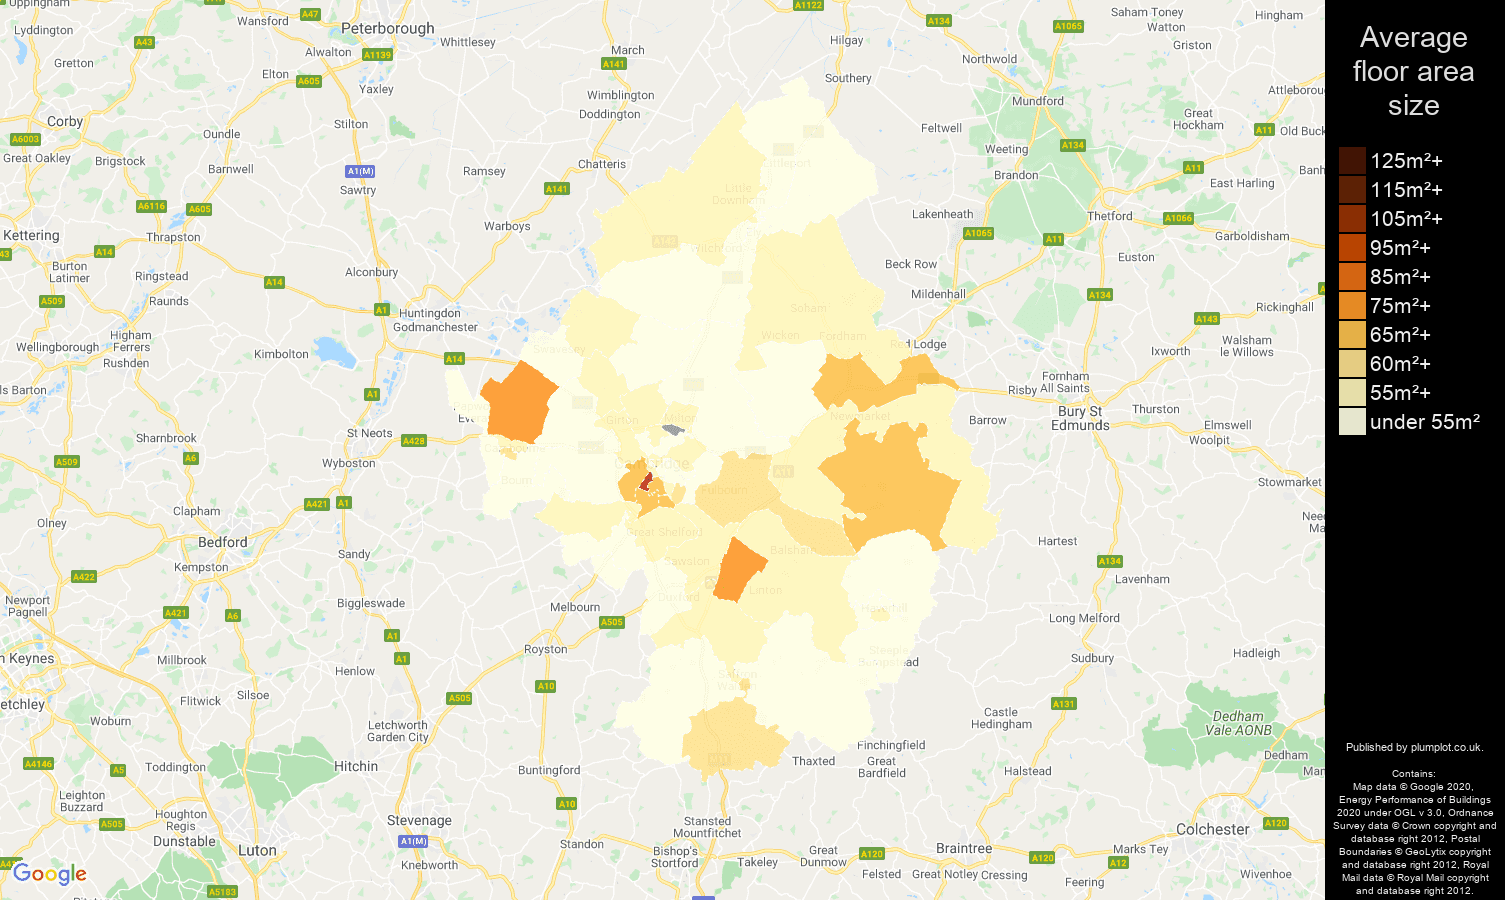 Cambridge map of average floor area size of flats